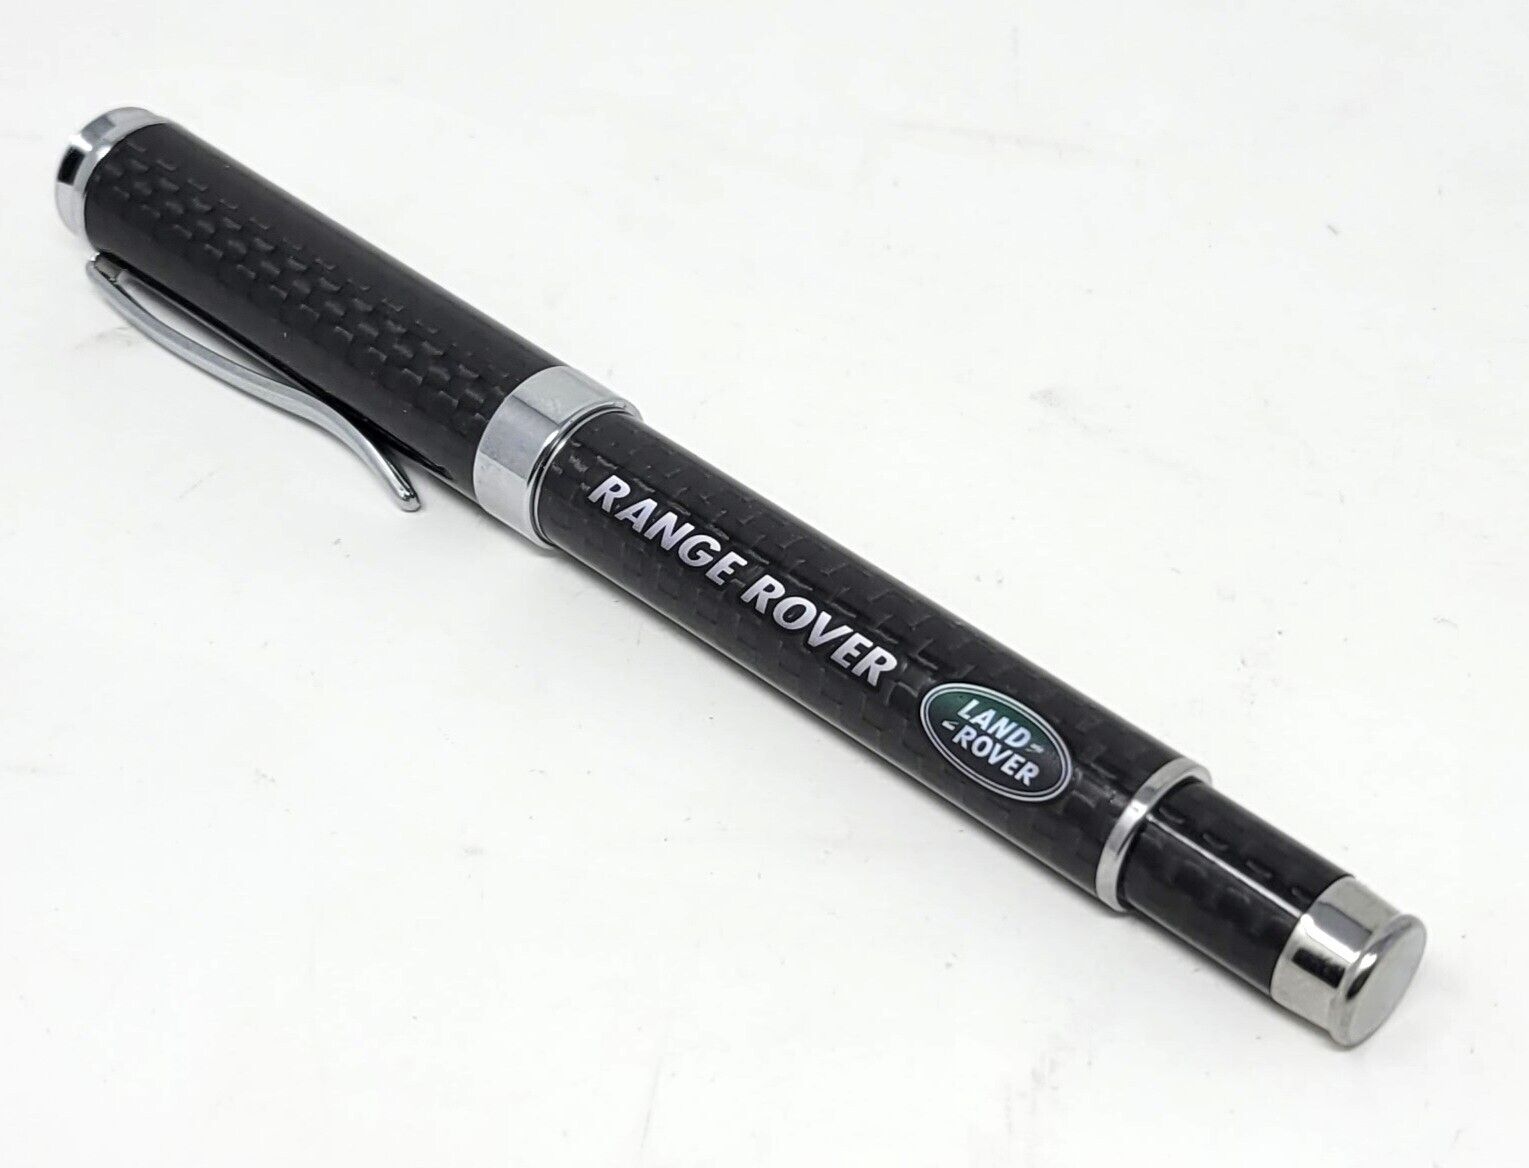 Range Rover Text and Logo Carbon Fiber Ballpoint Pen - GREAT GIFT